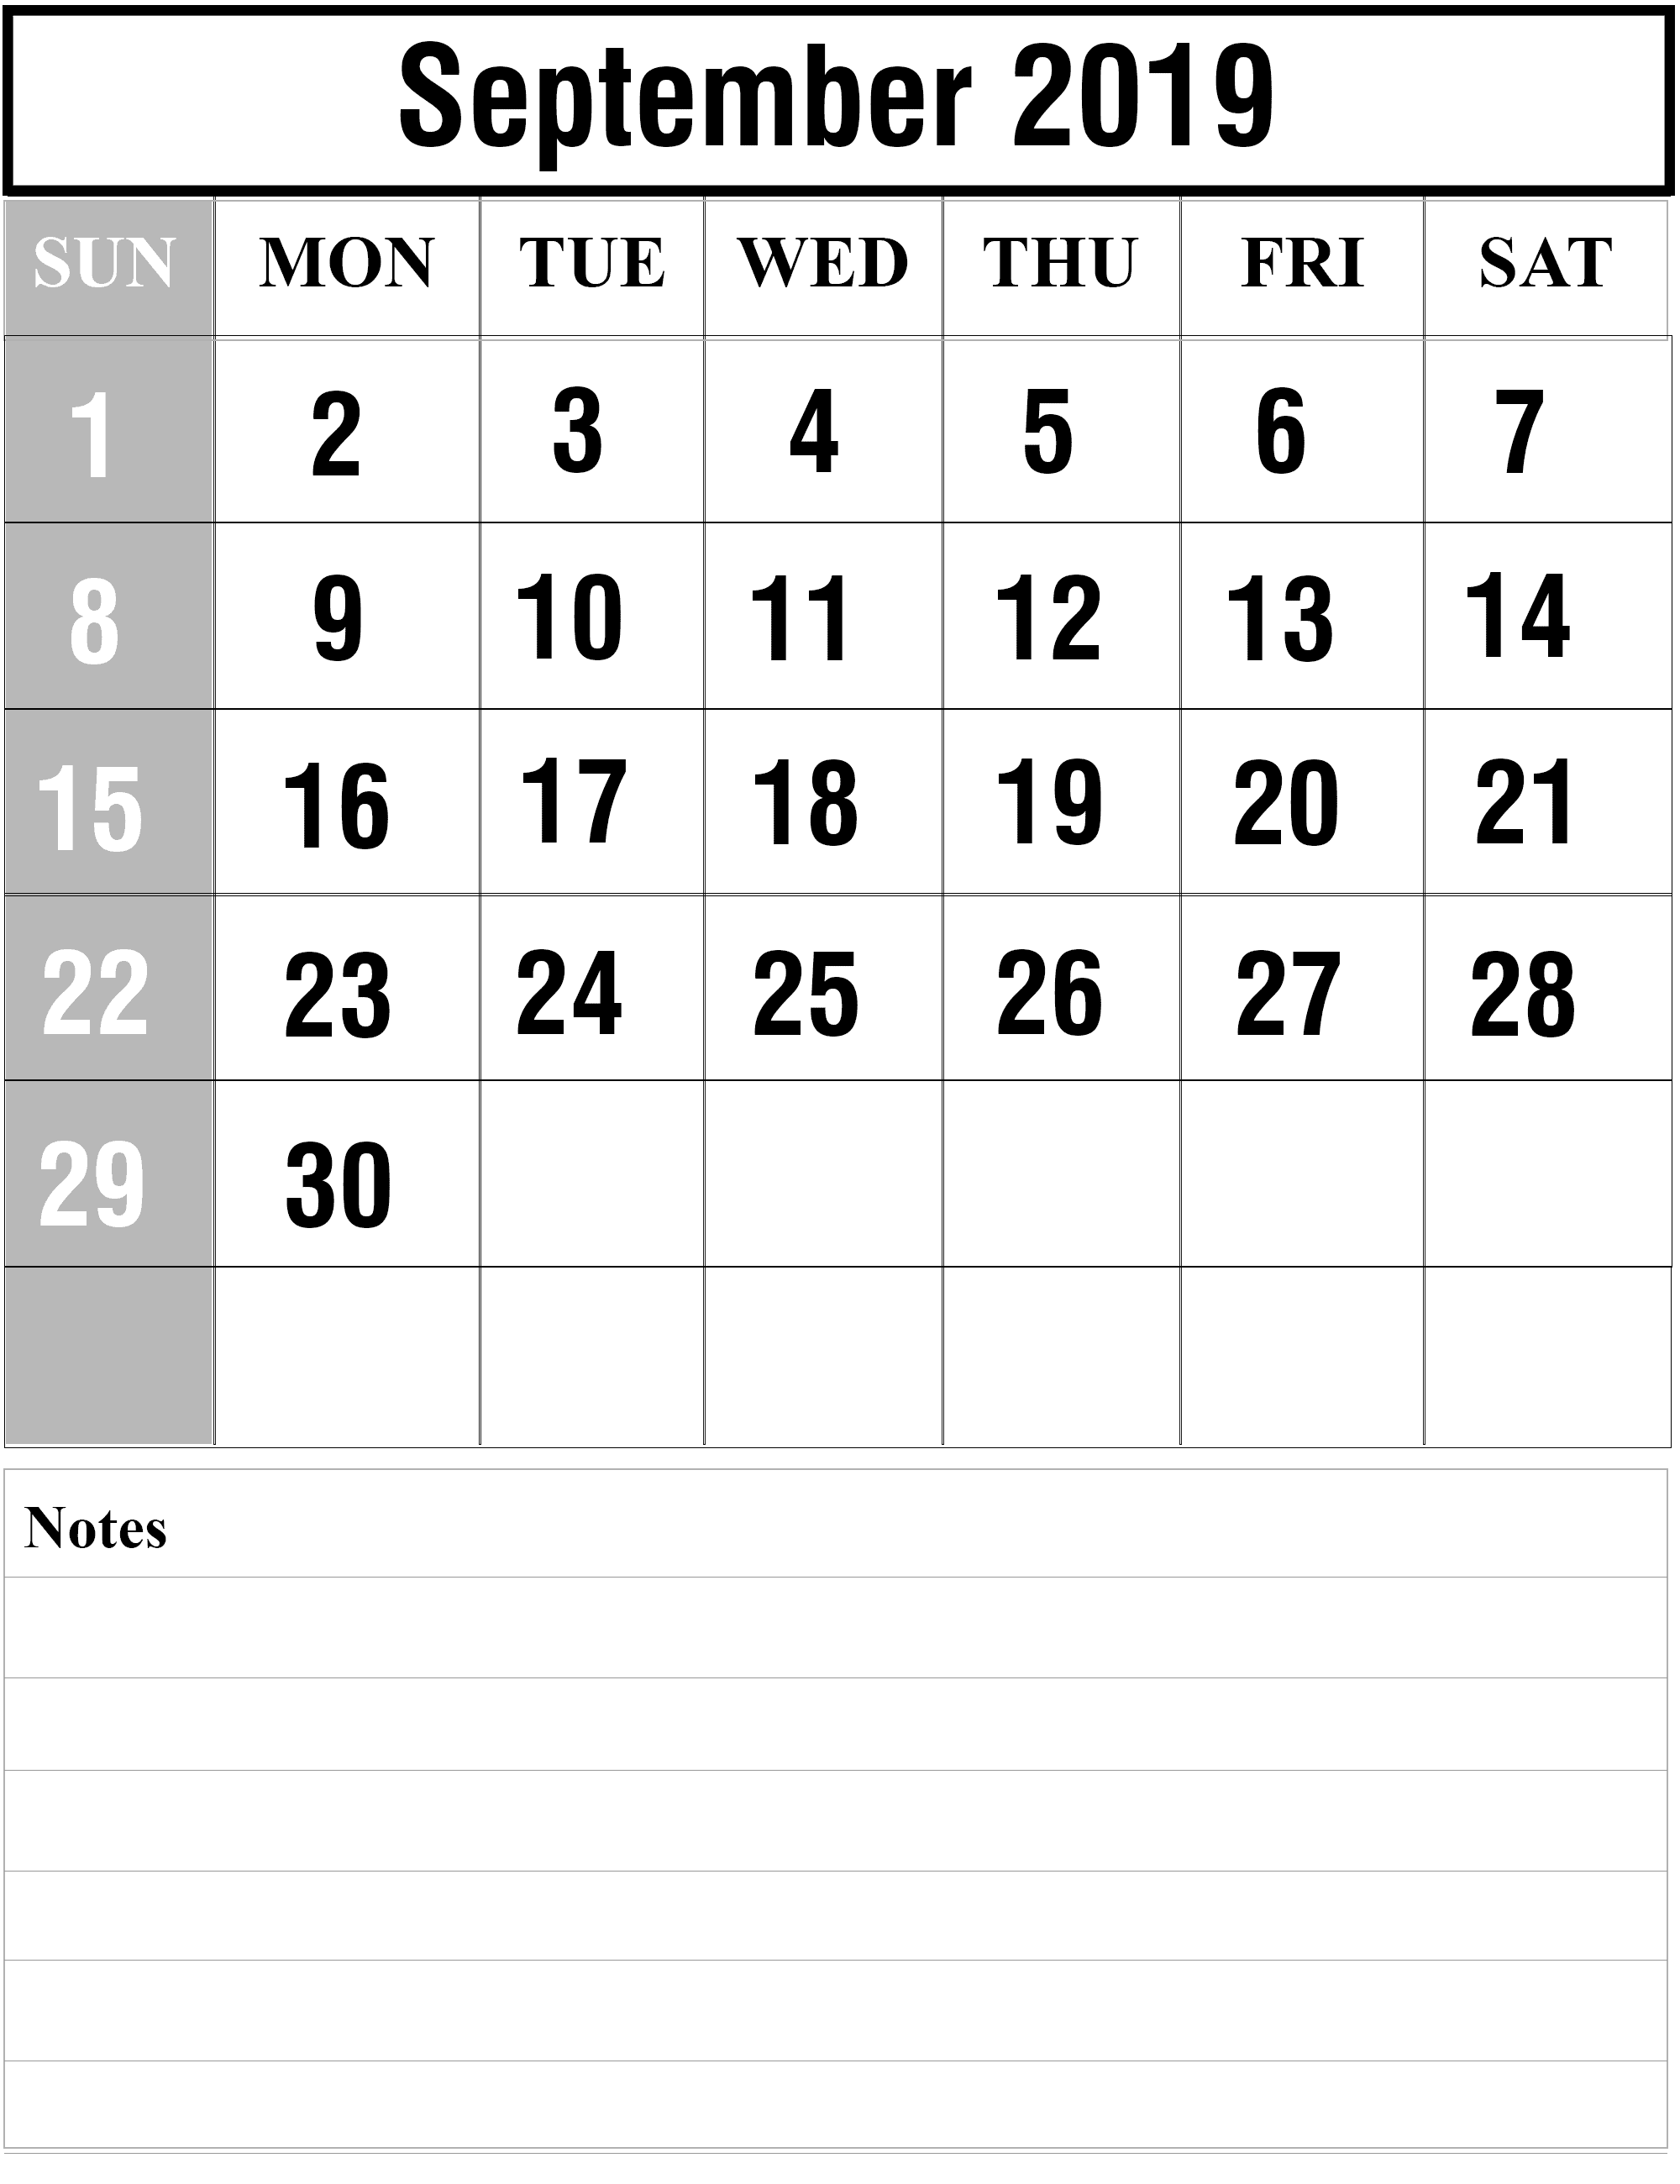 September Calendar Template Free Download